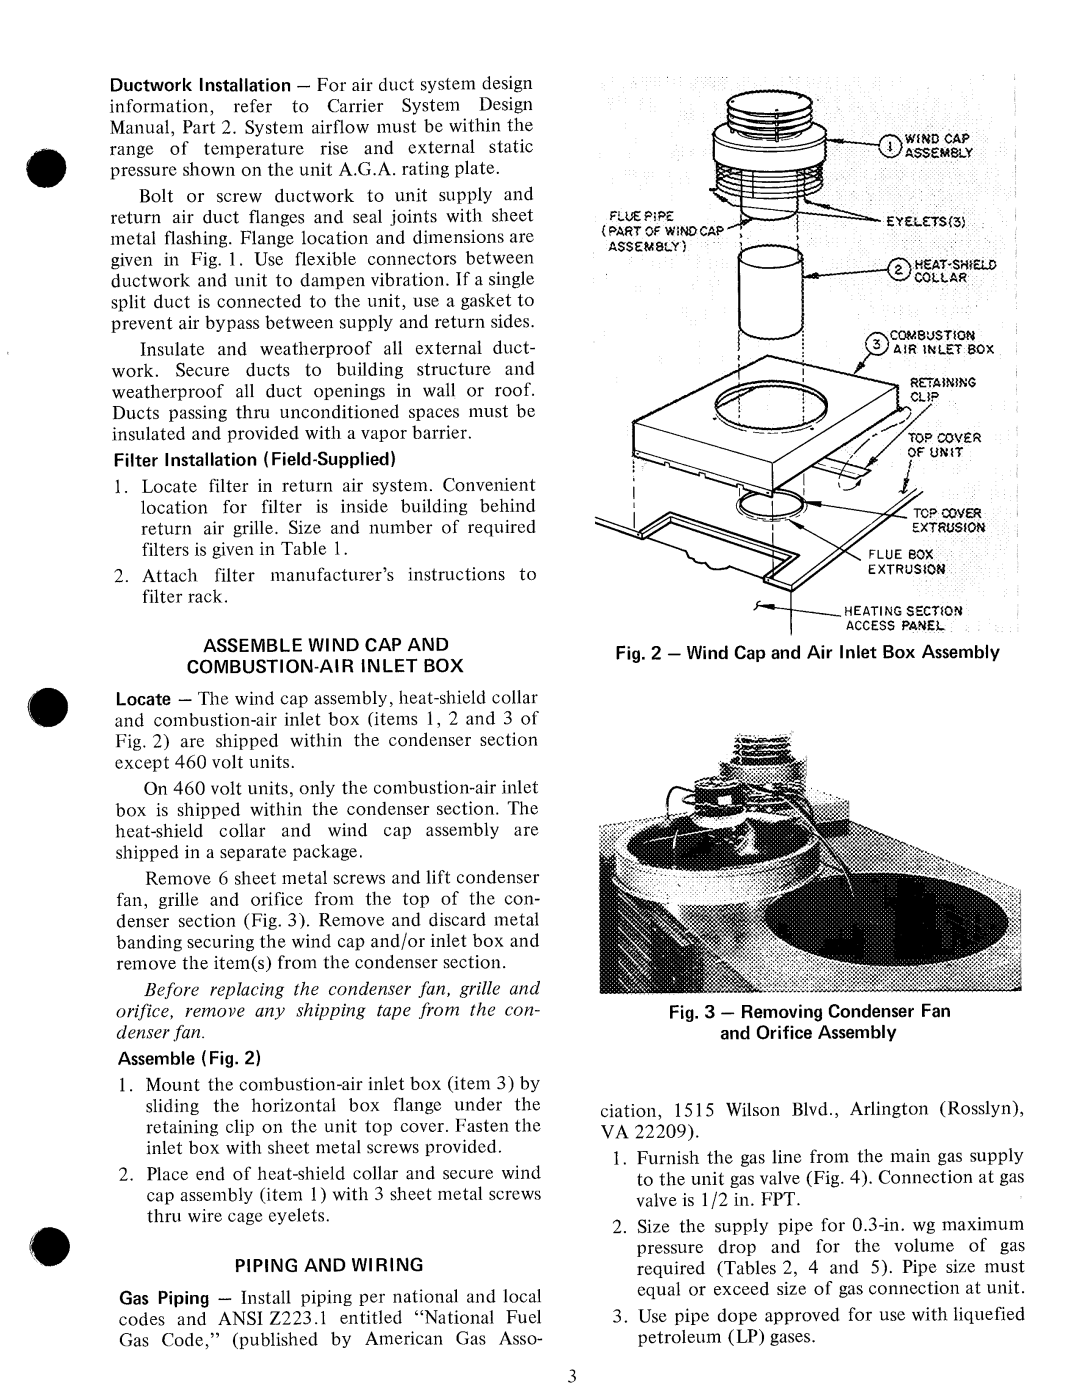 Carrier 48EL manual 